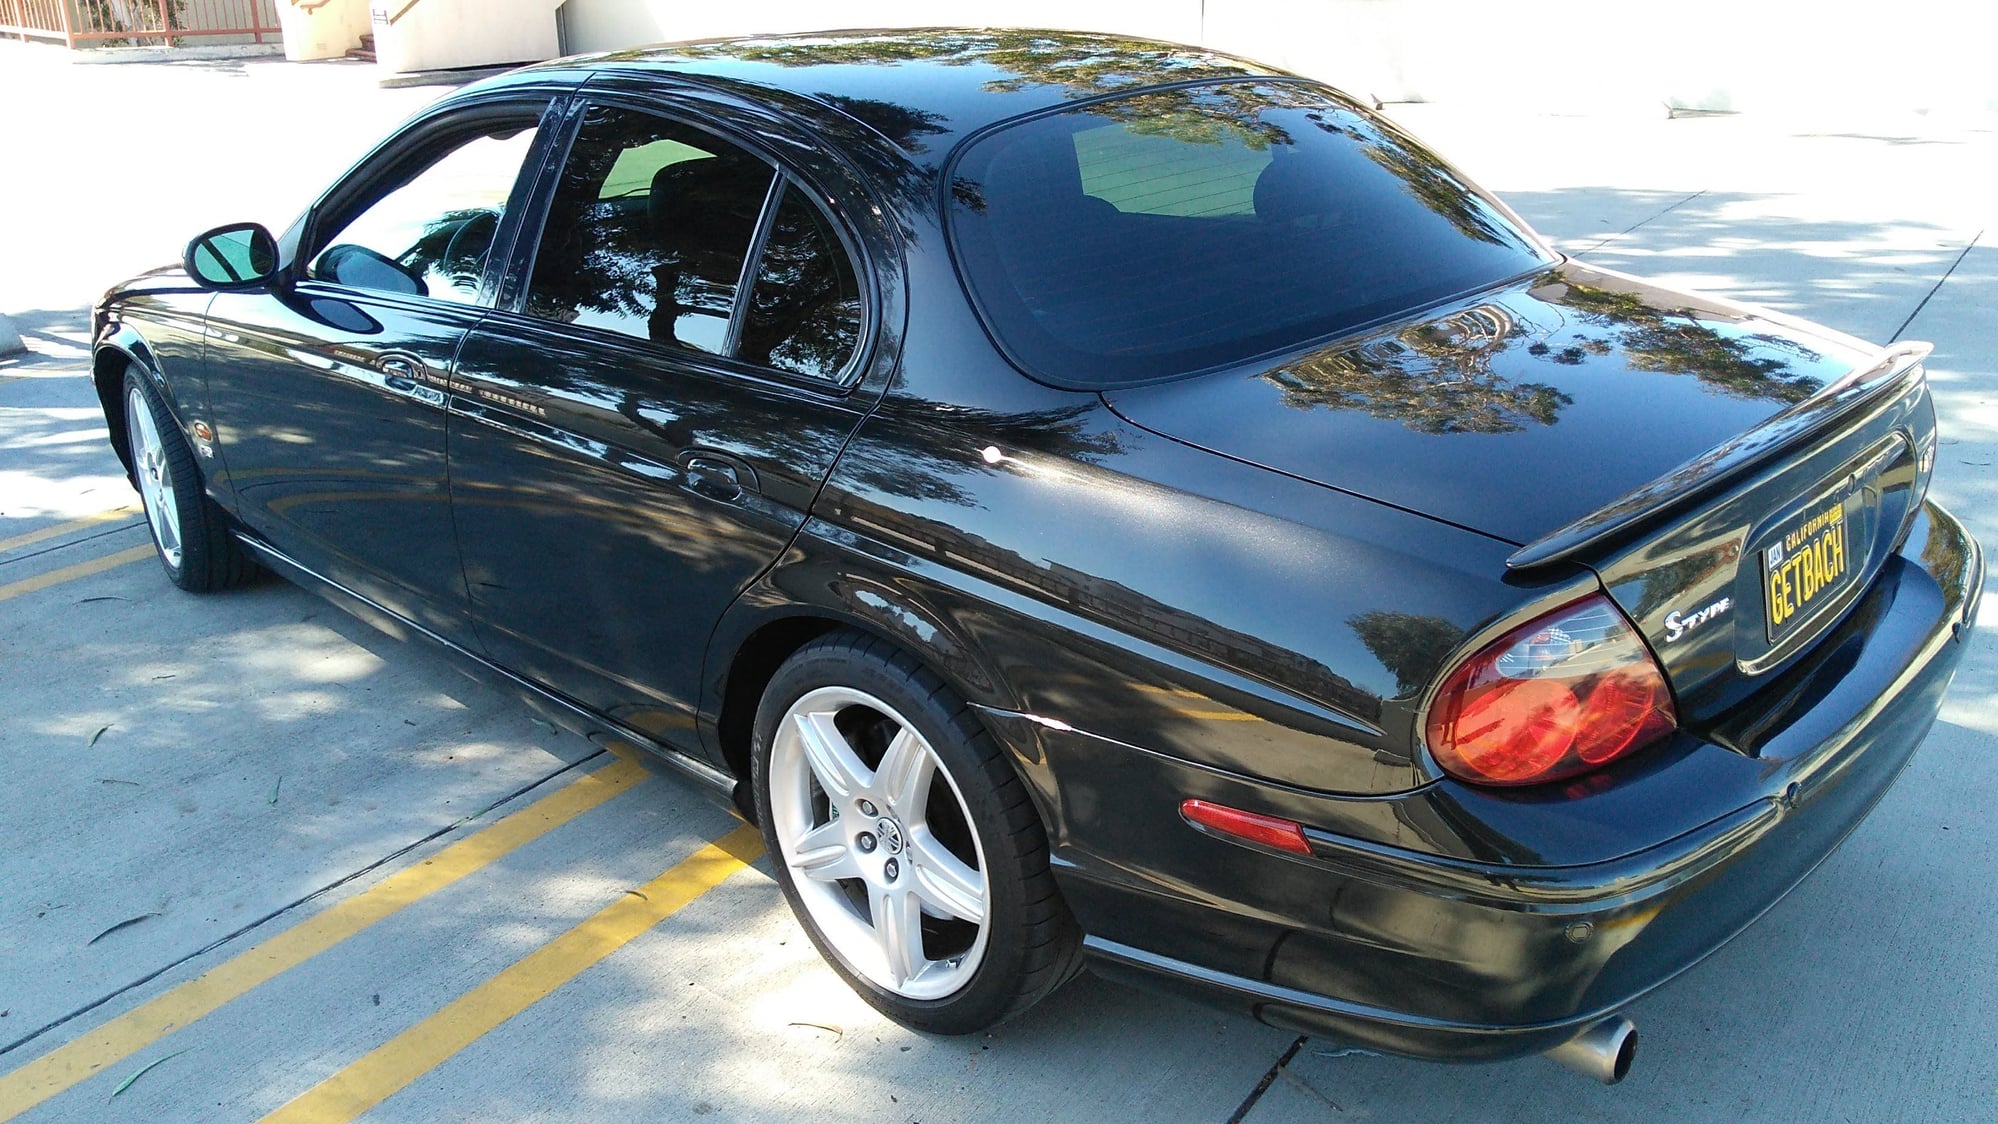 2003 Jaguar S-Type - 2003 S-Type R Supercharged - Used - VIN SAJEA03V331M54771 - 128,000 Miles - 8 cyl - 2WD - Automatic - Sedan - Black - Chula Vista, CA 91910, United States